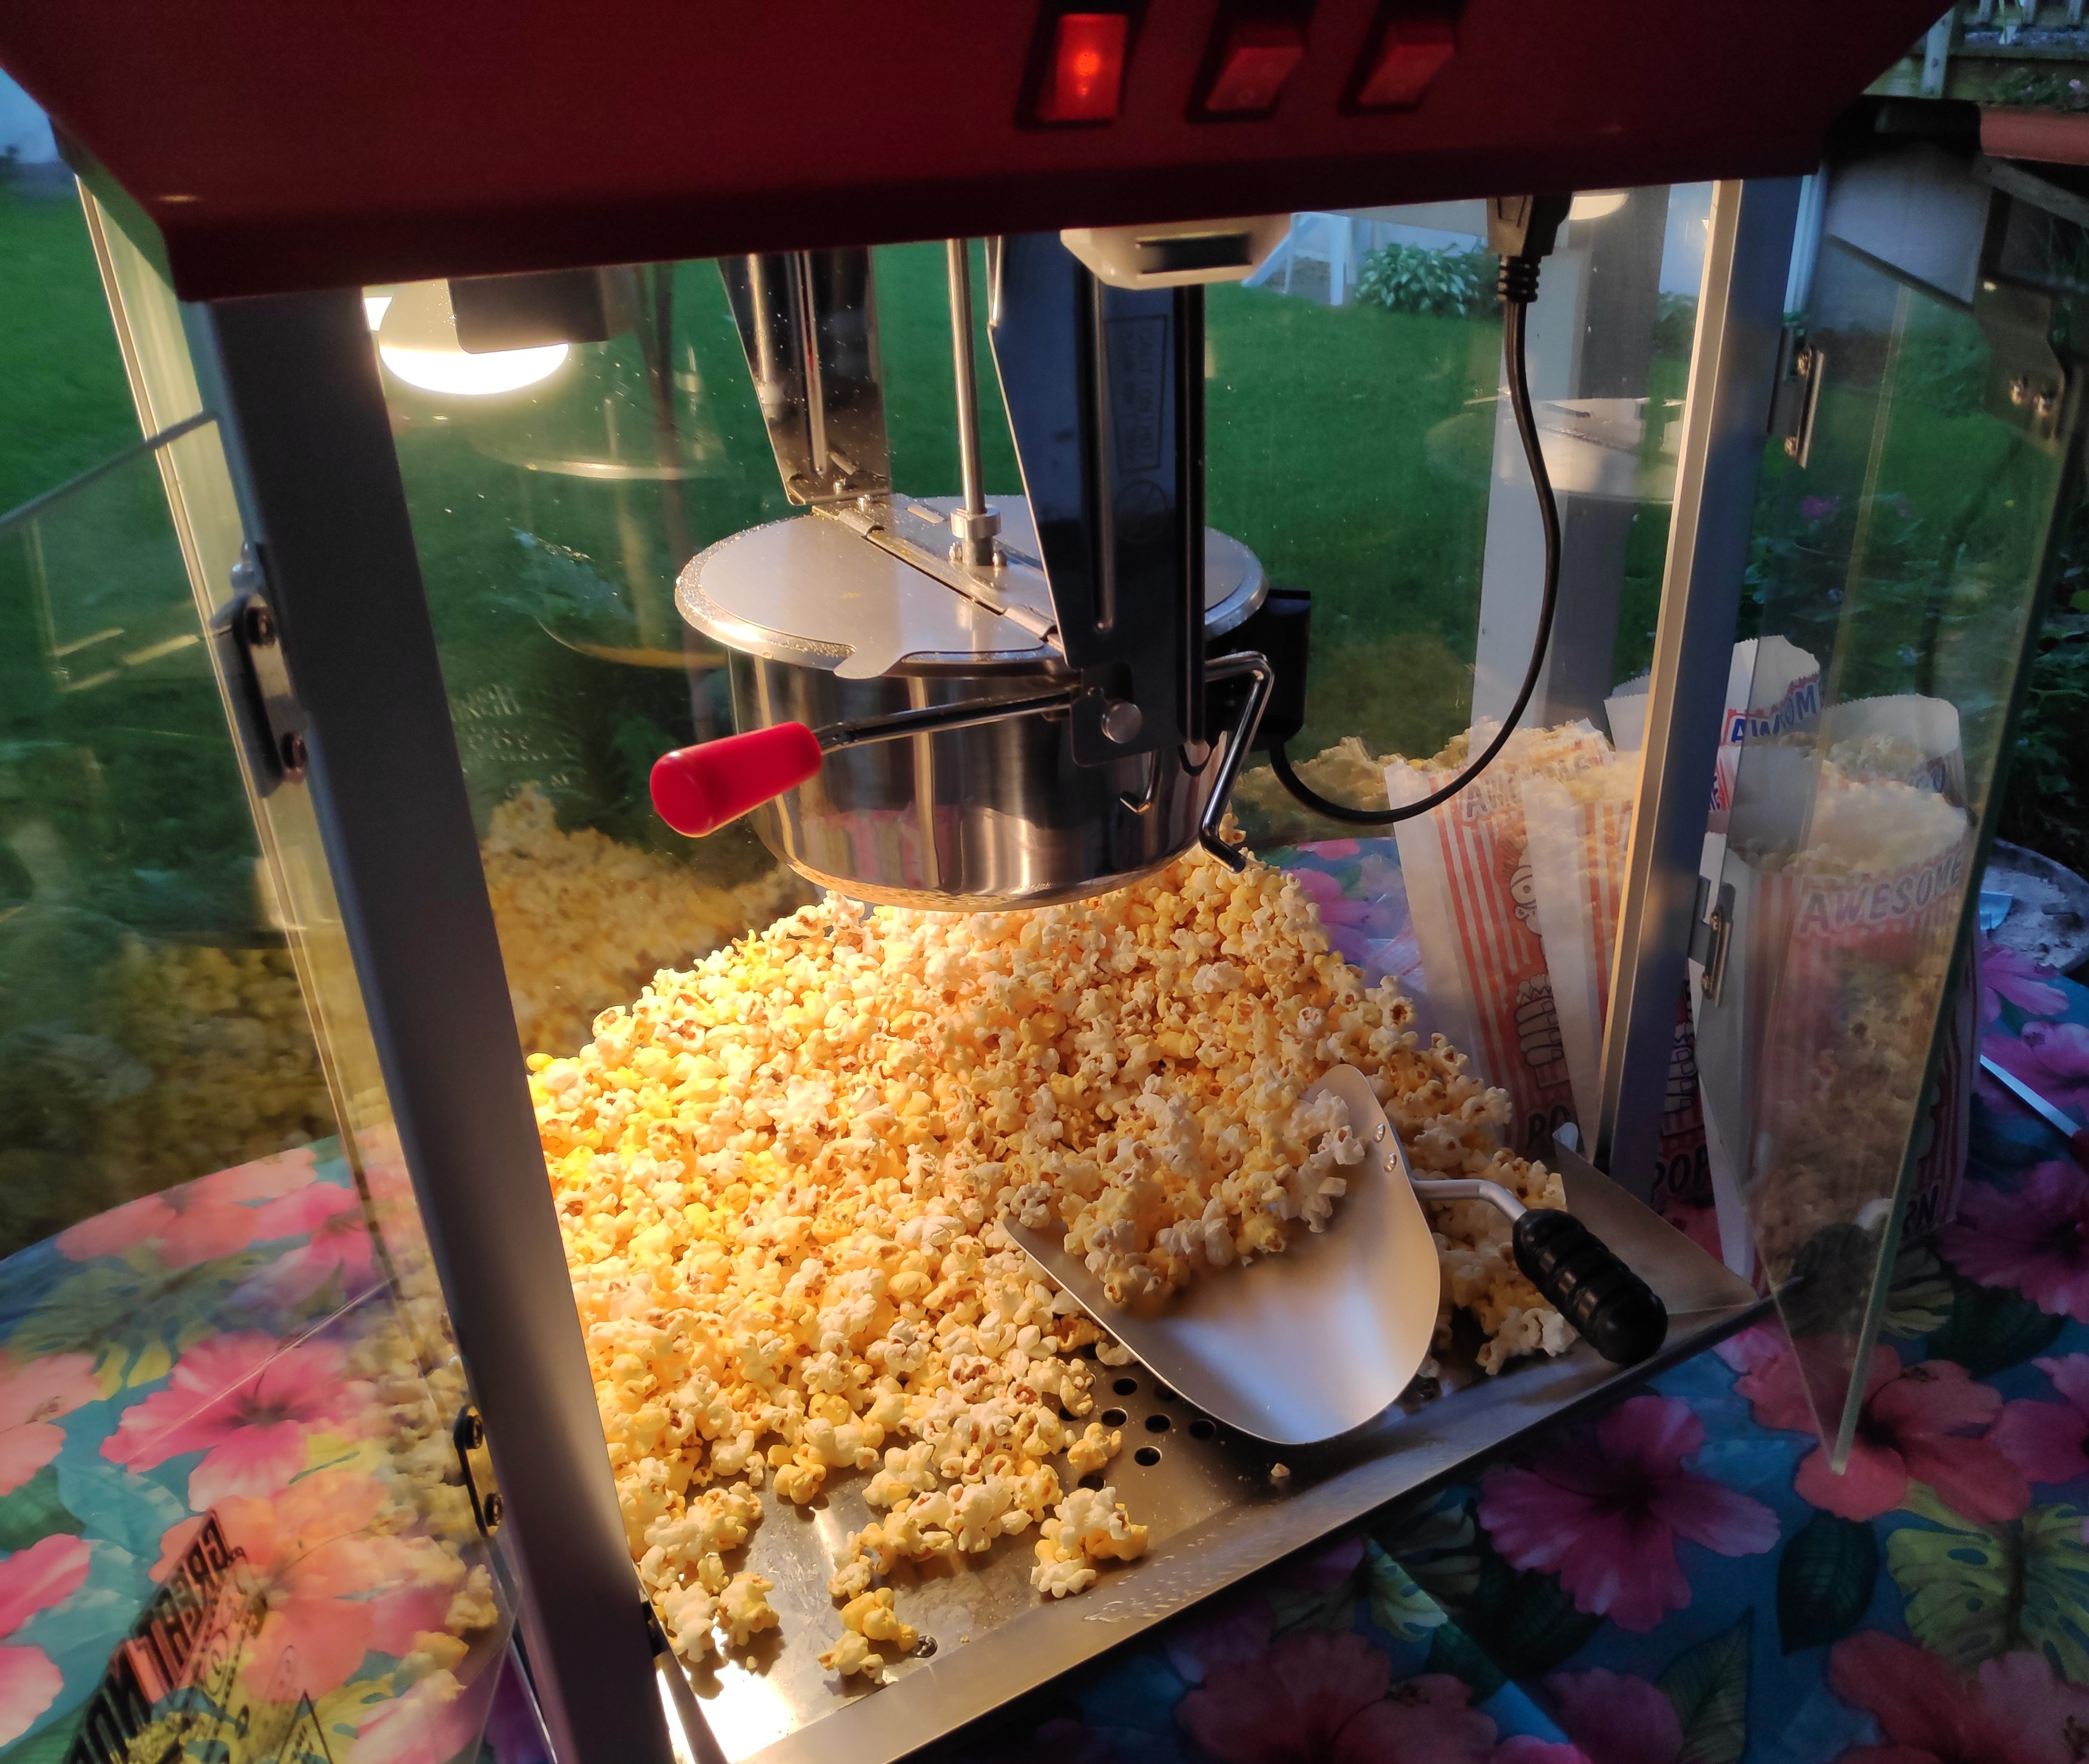 8oz Theater Popcorn Machine - WNY Movie Magic